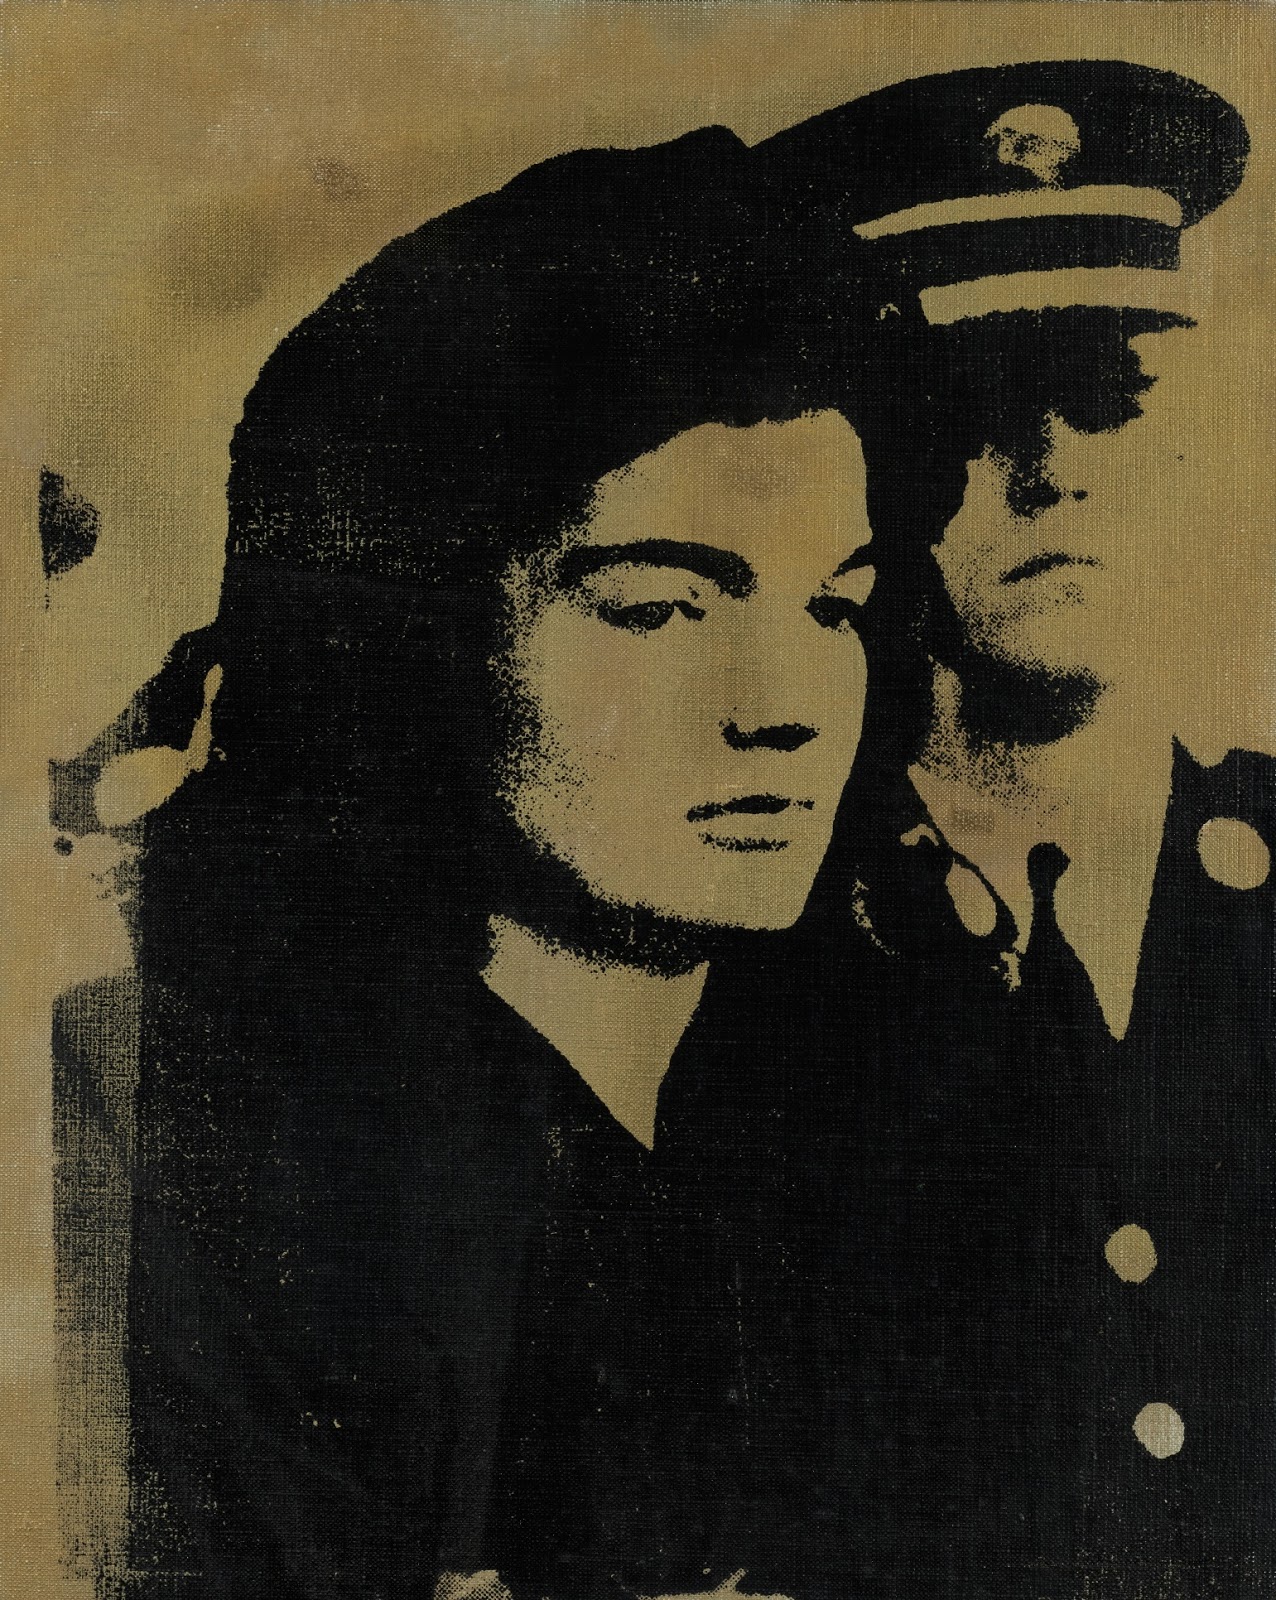 Andy+Warhol-1928-1987 (70).jpg